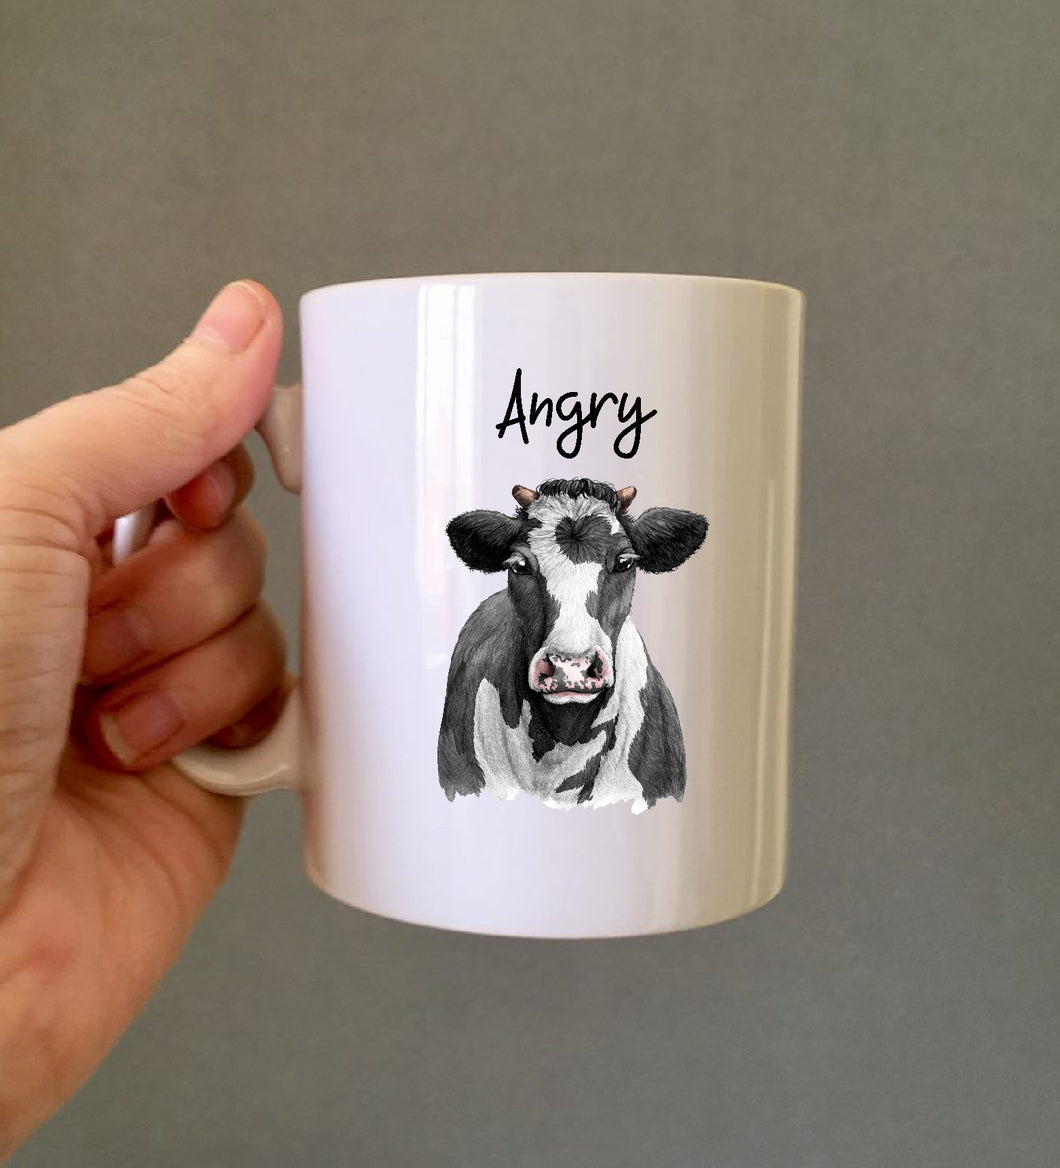 Angry Cow Ceramic Printed Mug